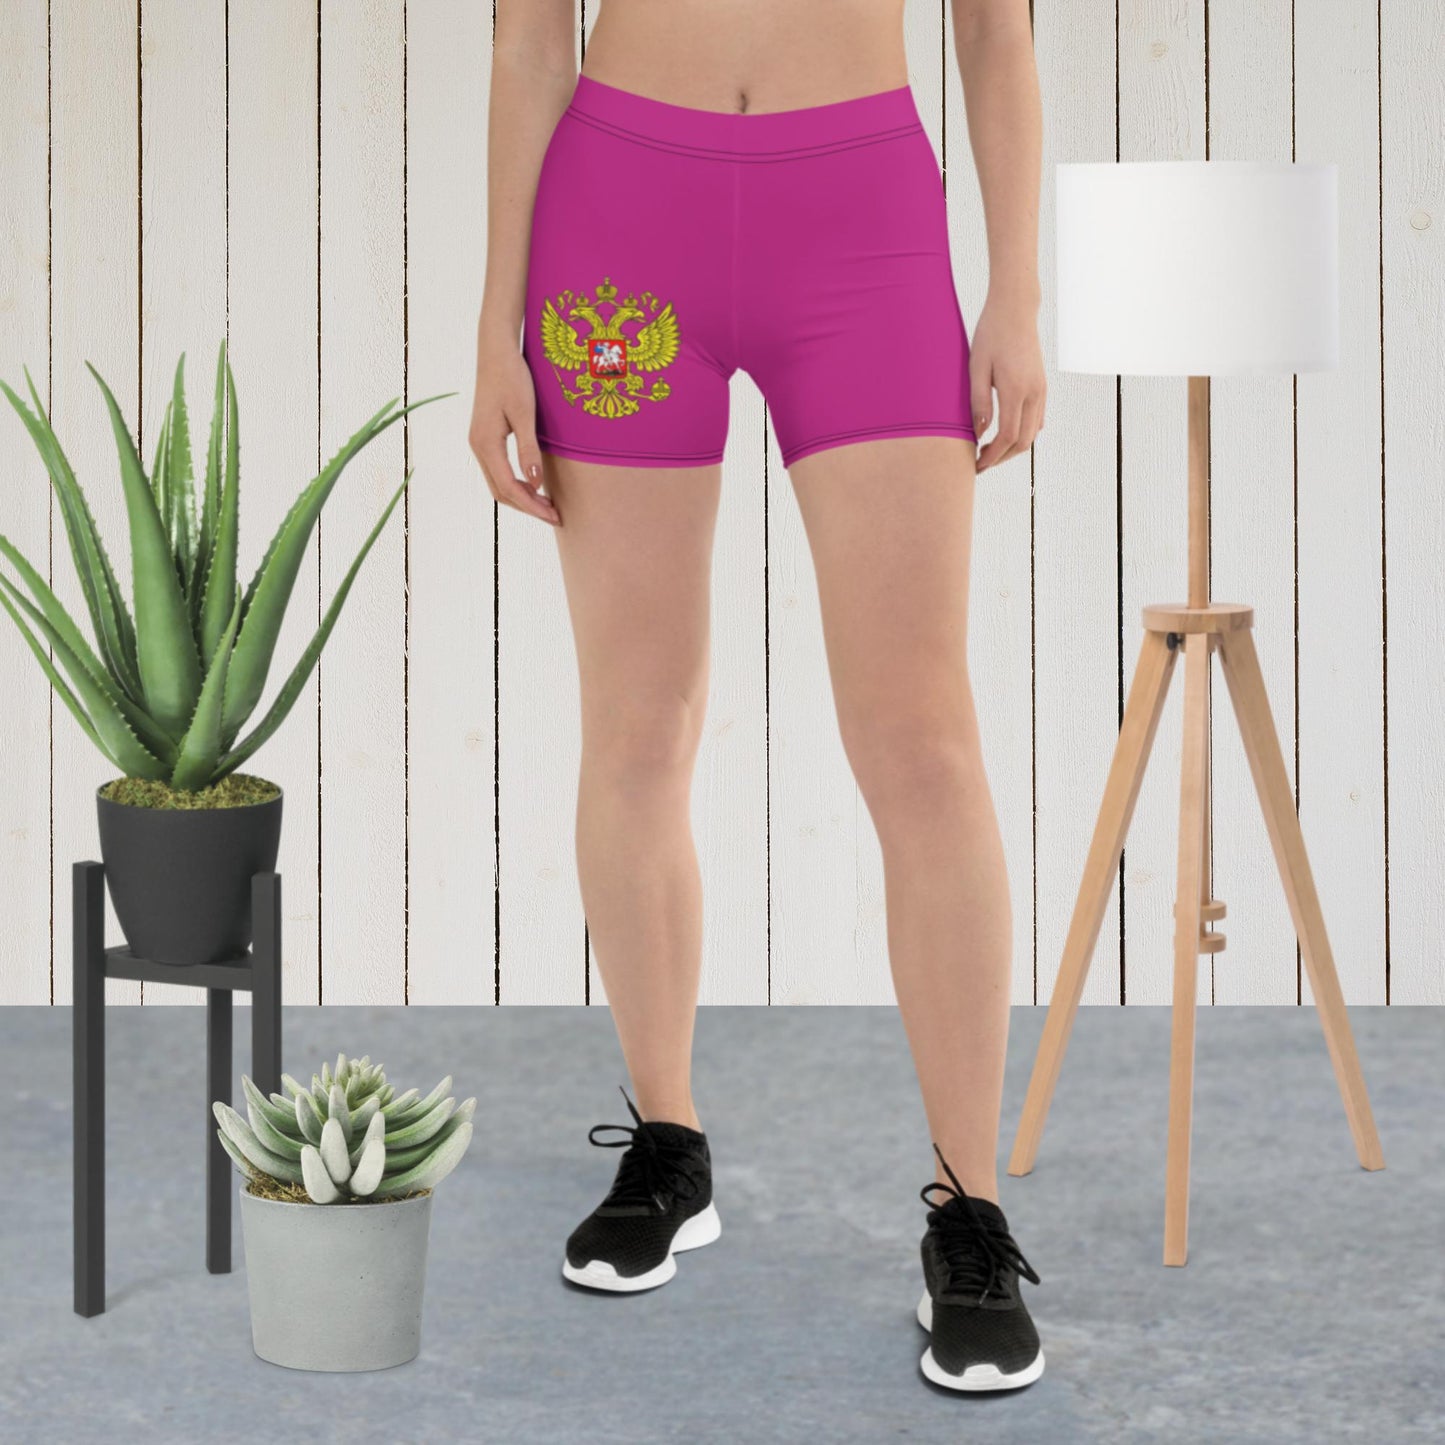 Kurze enge Sporthose Shorts für Damen in lila